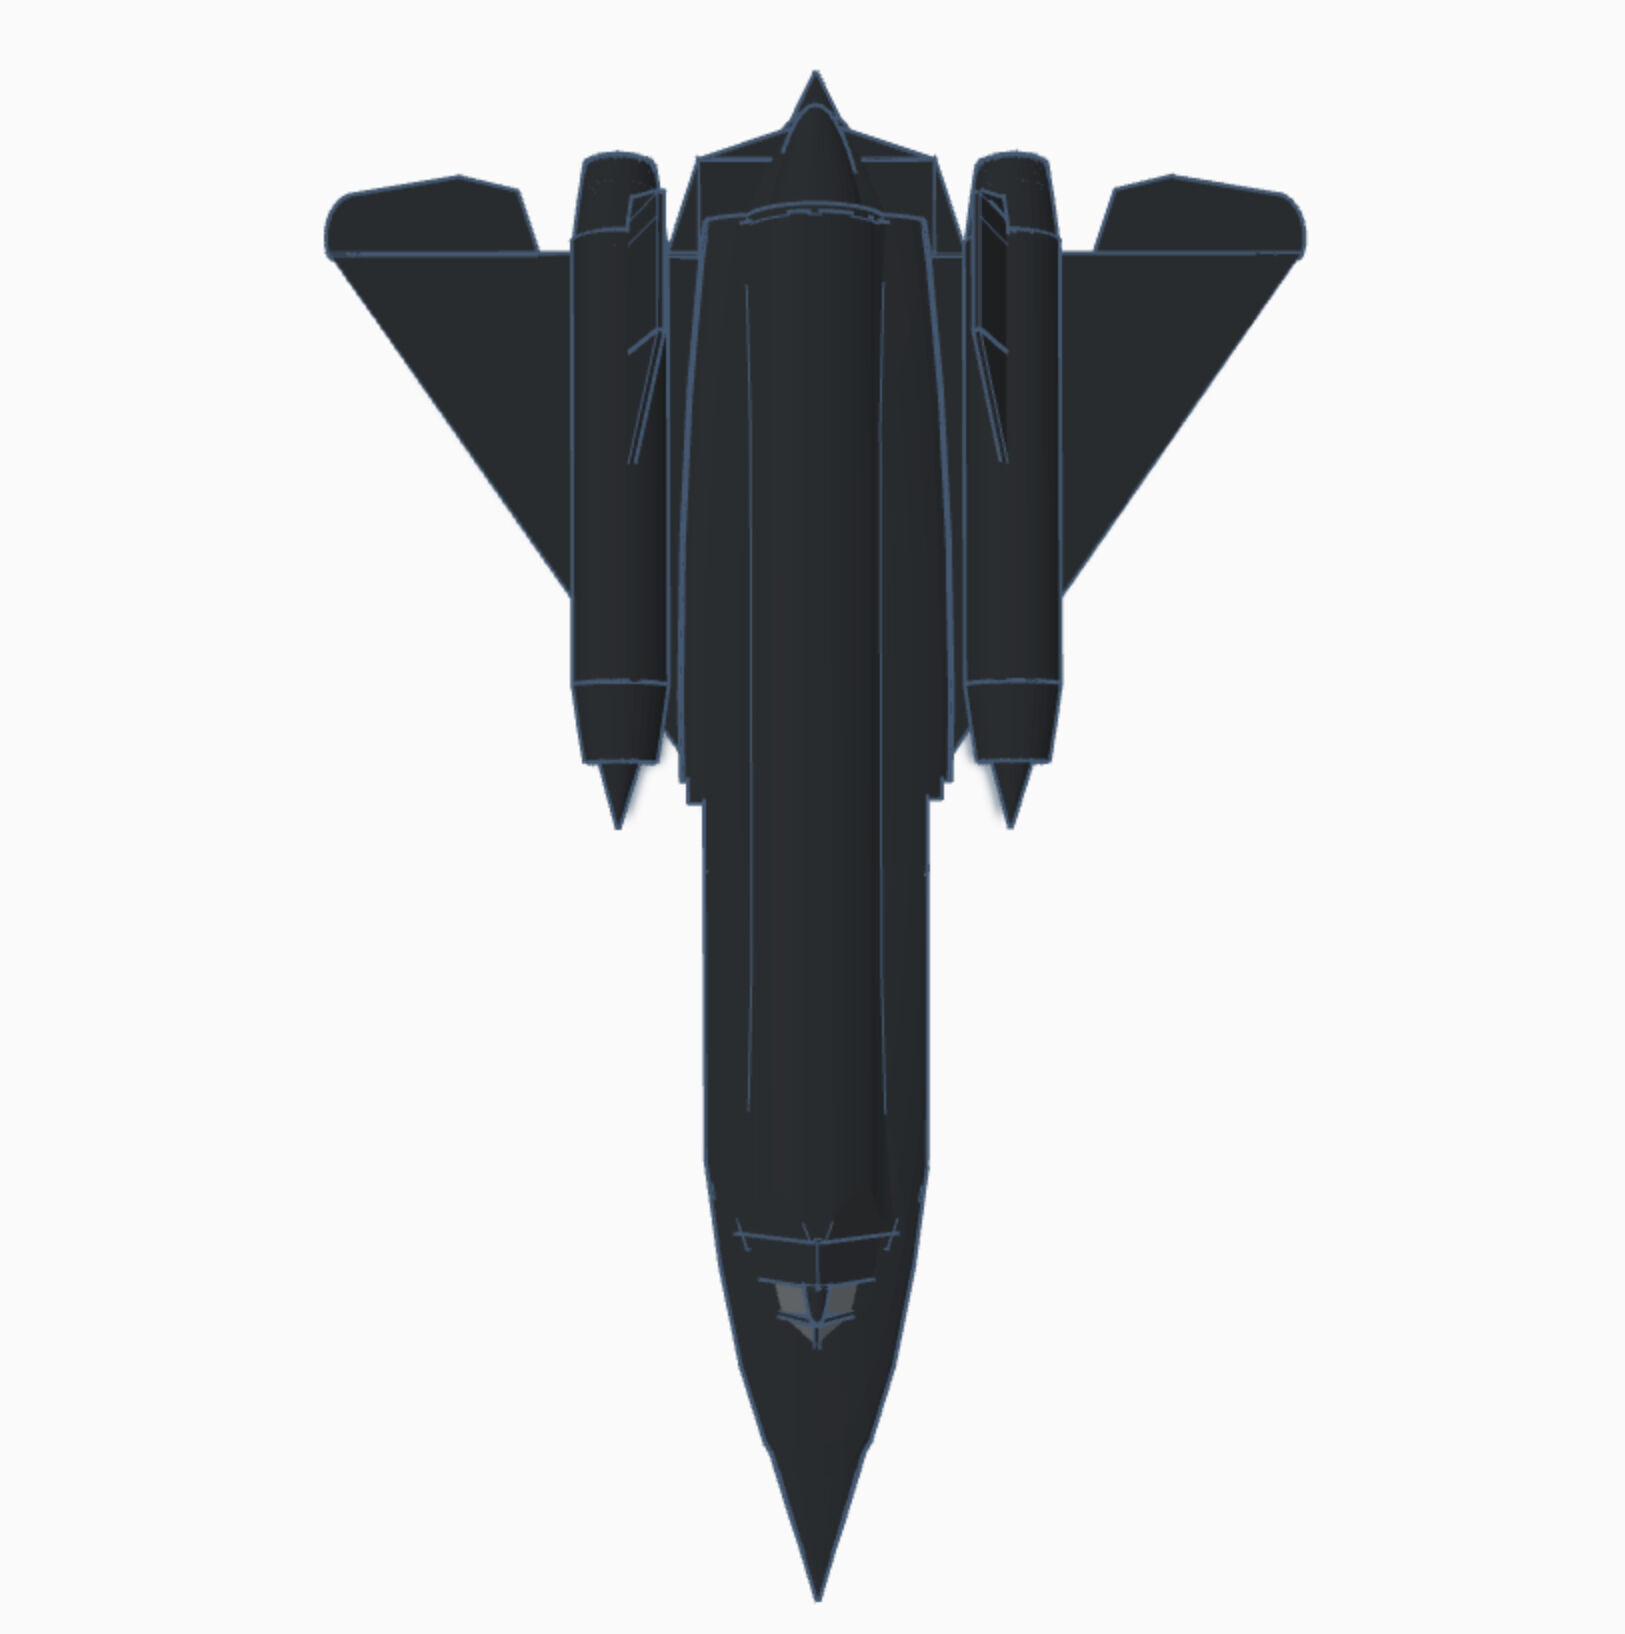 SR-71 Blackbird